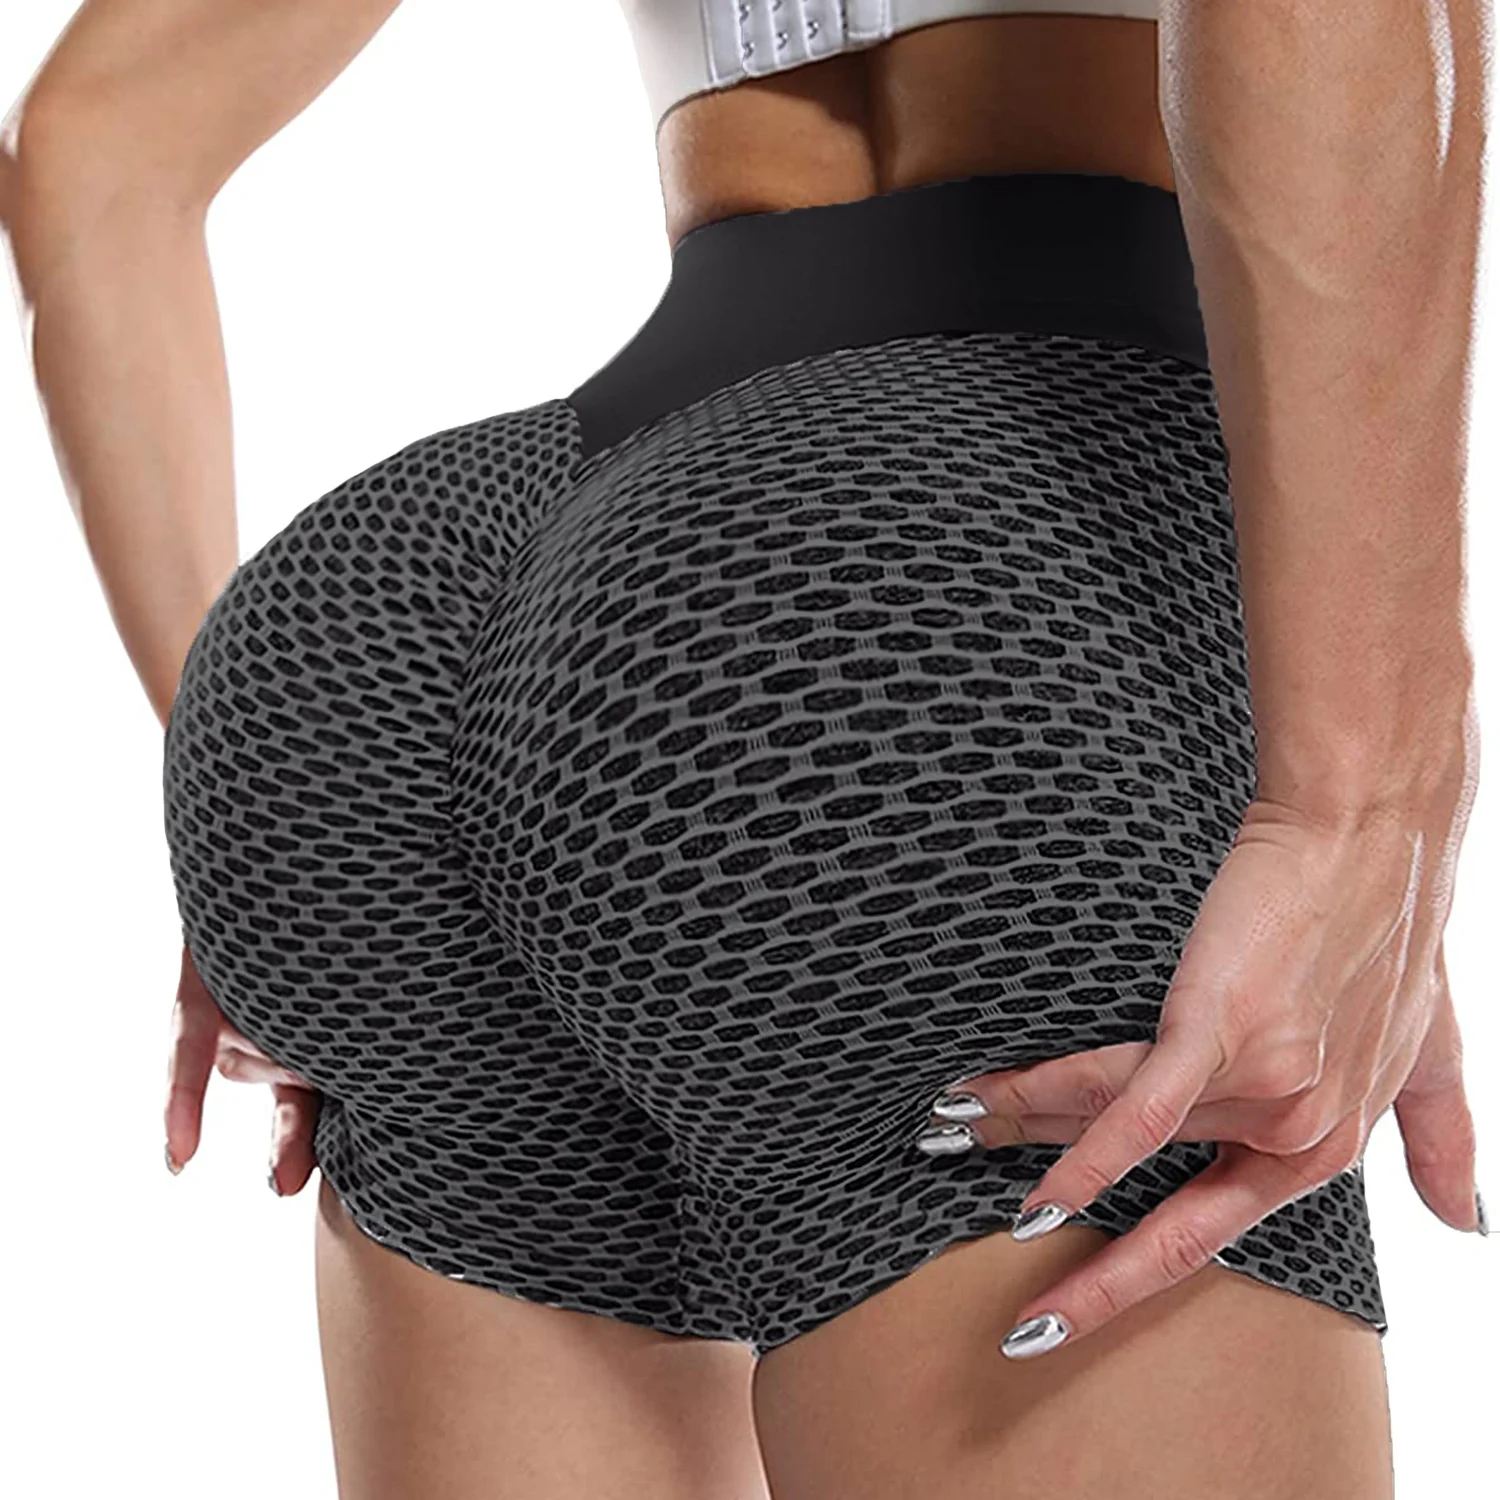 

Women's Scrunch Booty Yoga Shorts Butt Lift Ruched Push Up Shorts High Waist Textured Pants Tummy Control Gym Biker Shorts